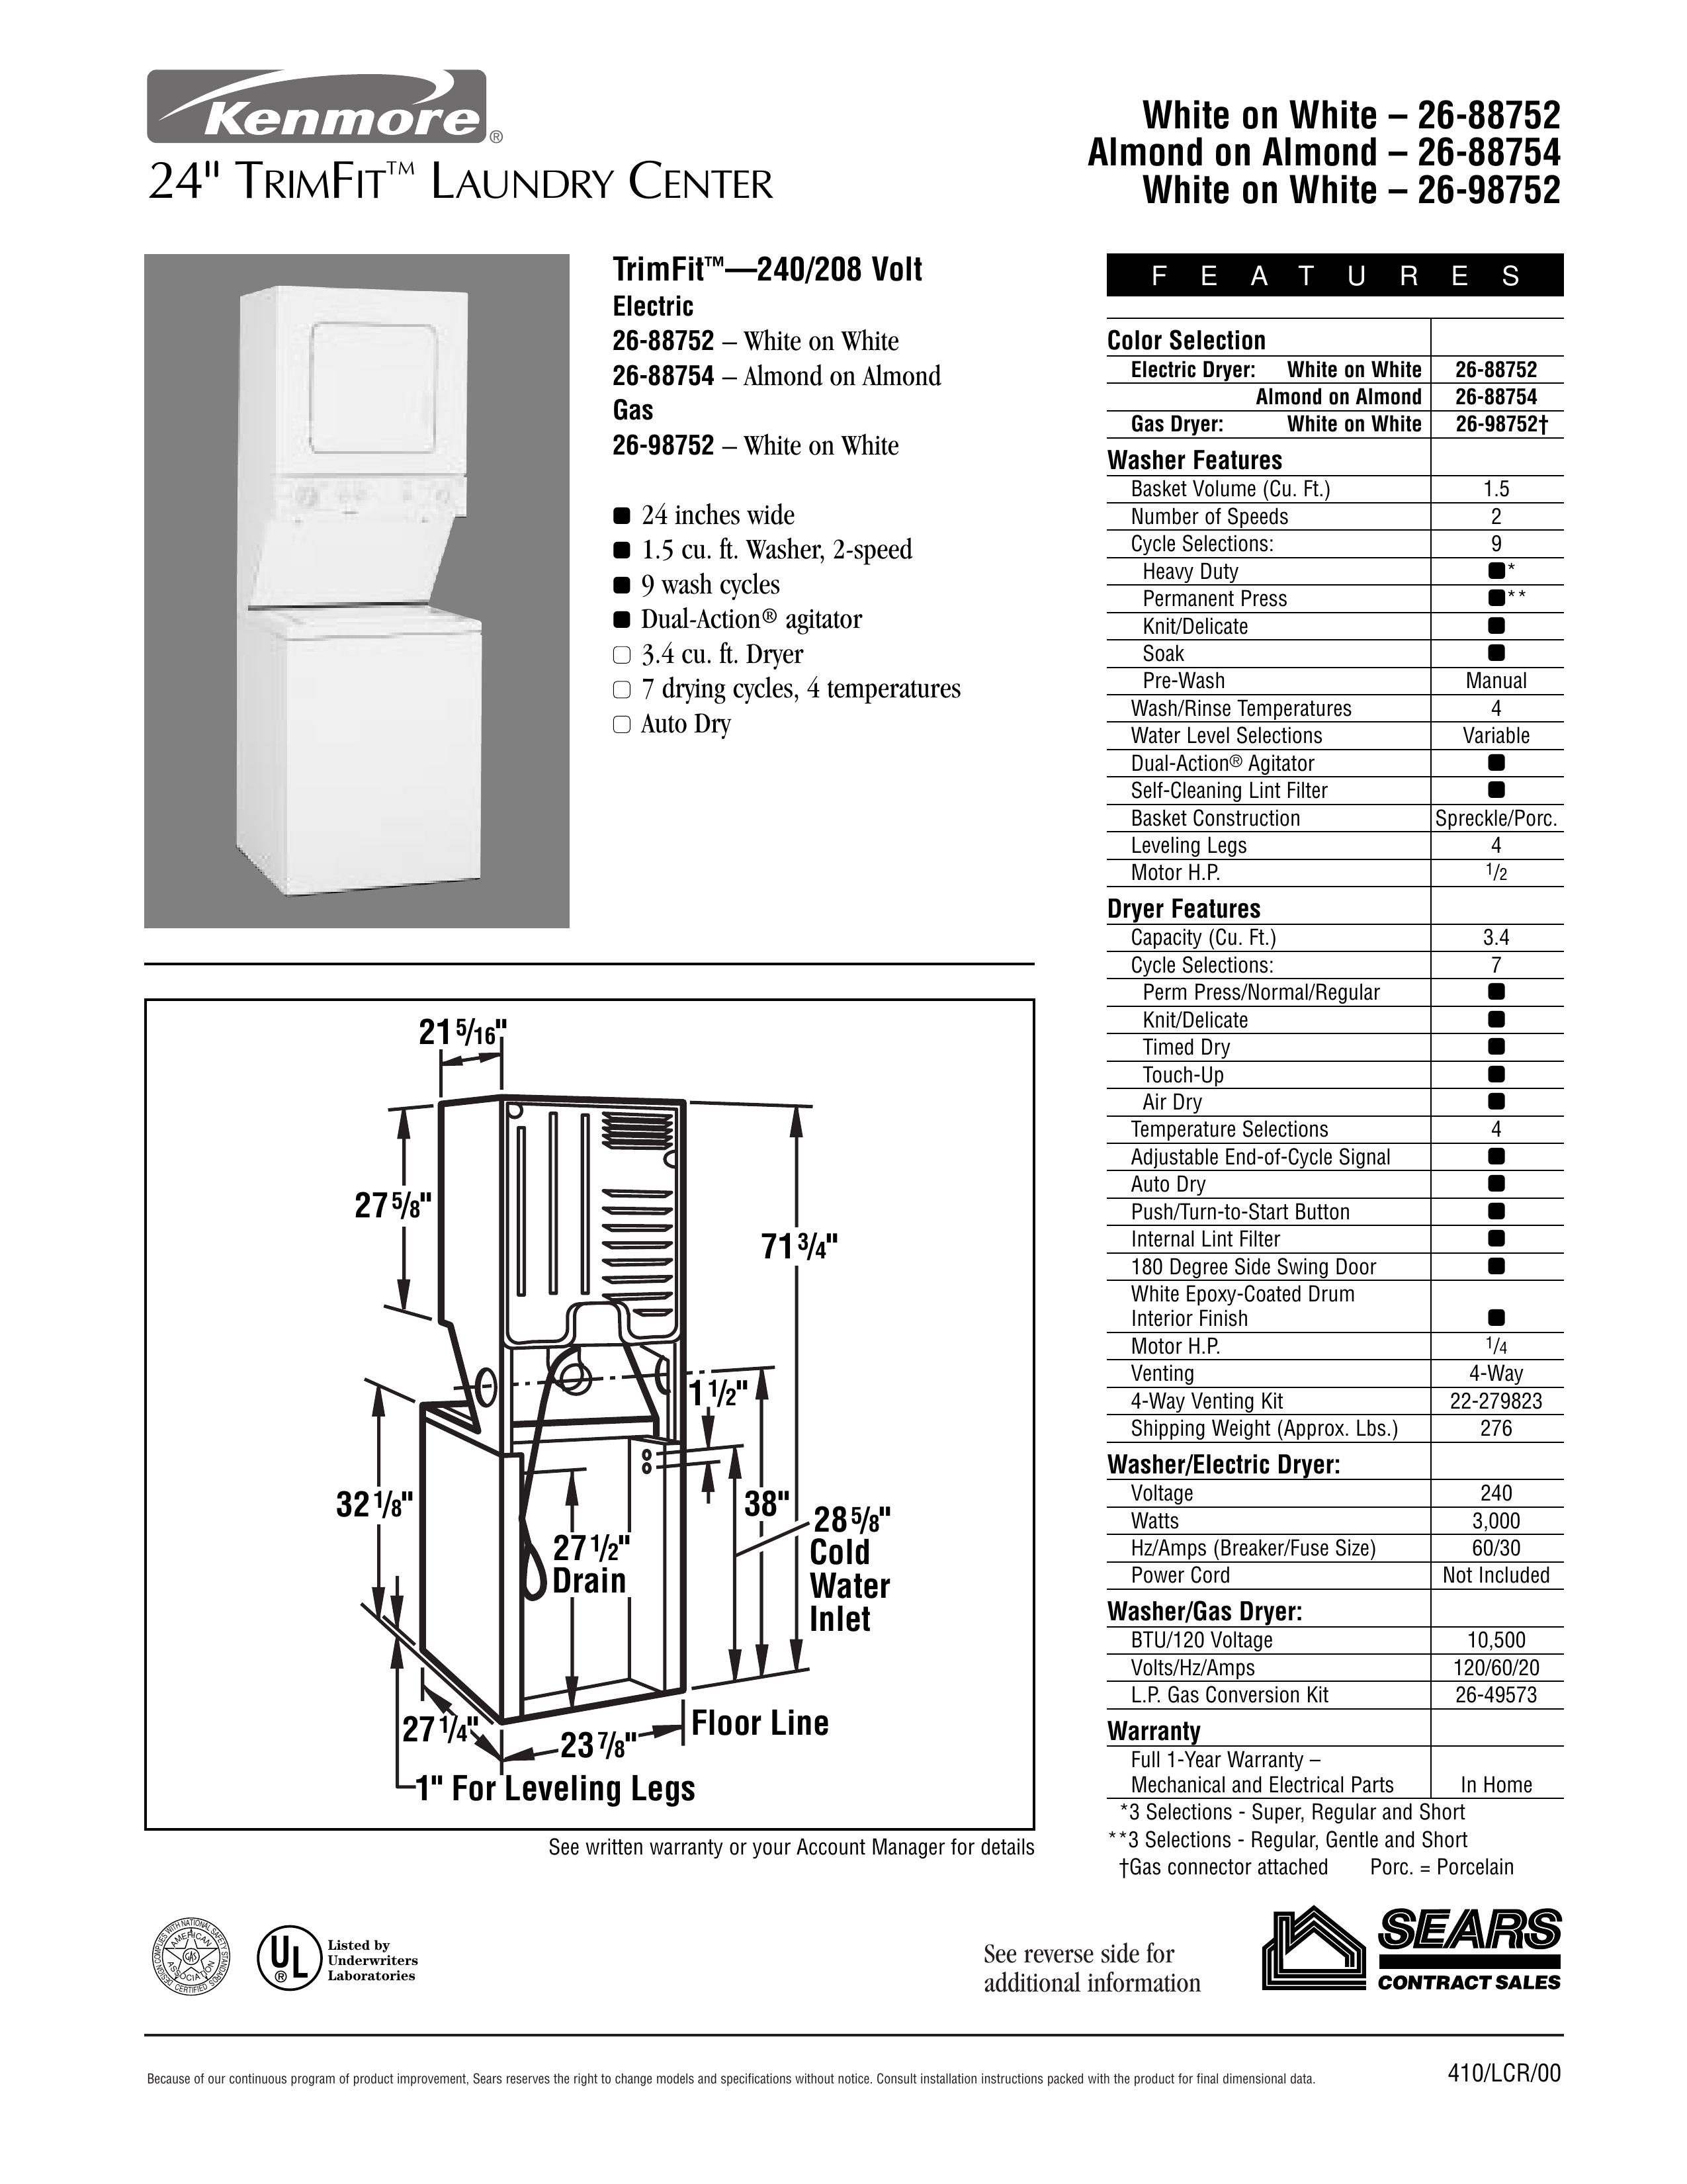 Kenmore 26-9875224 Washer/Dryer User Manual